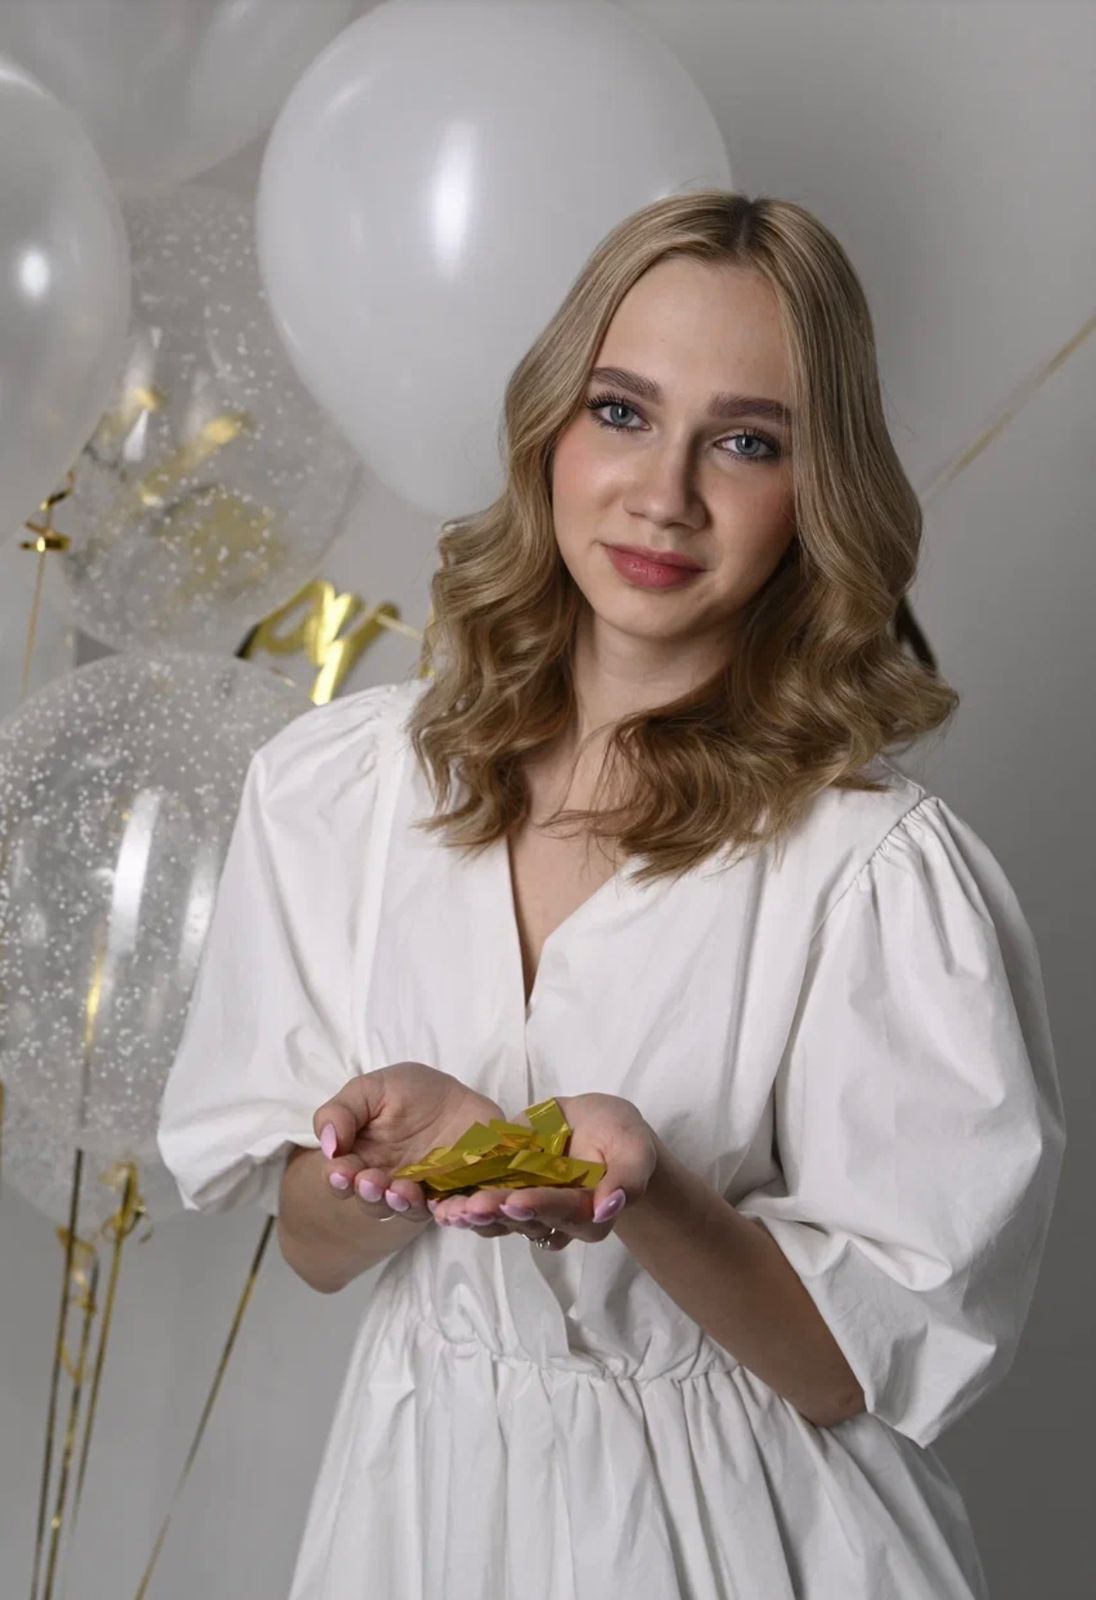 Терехова Анфиса Андреевна, 15 лет